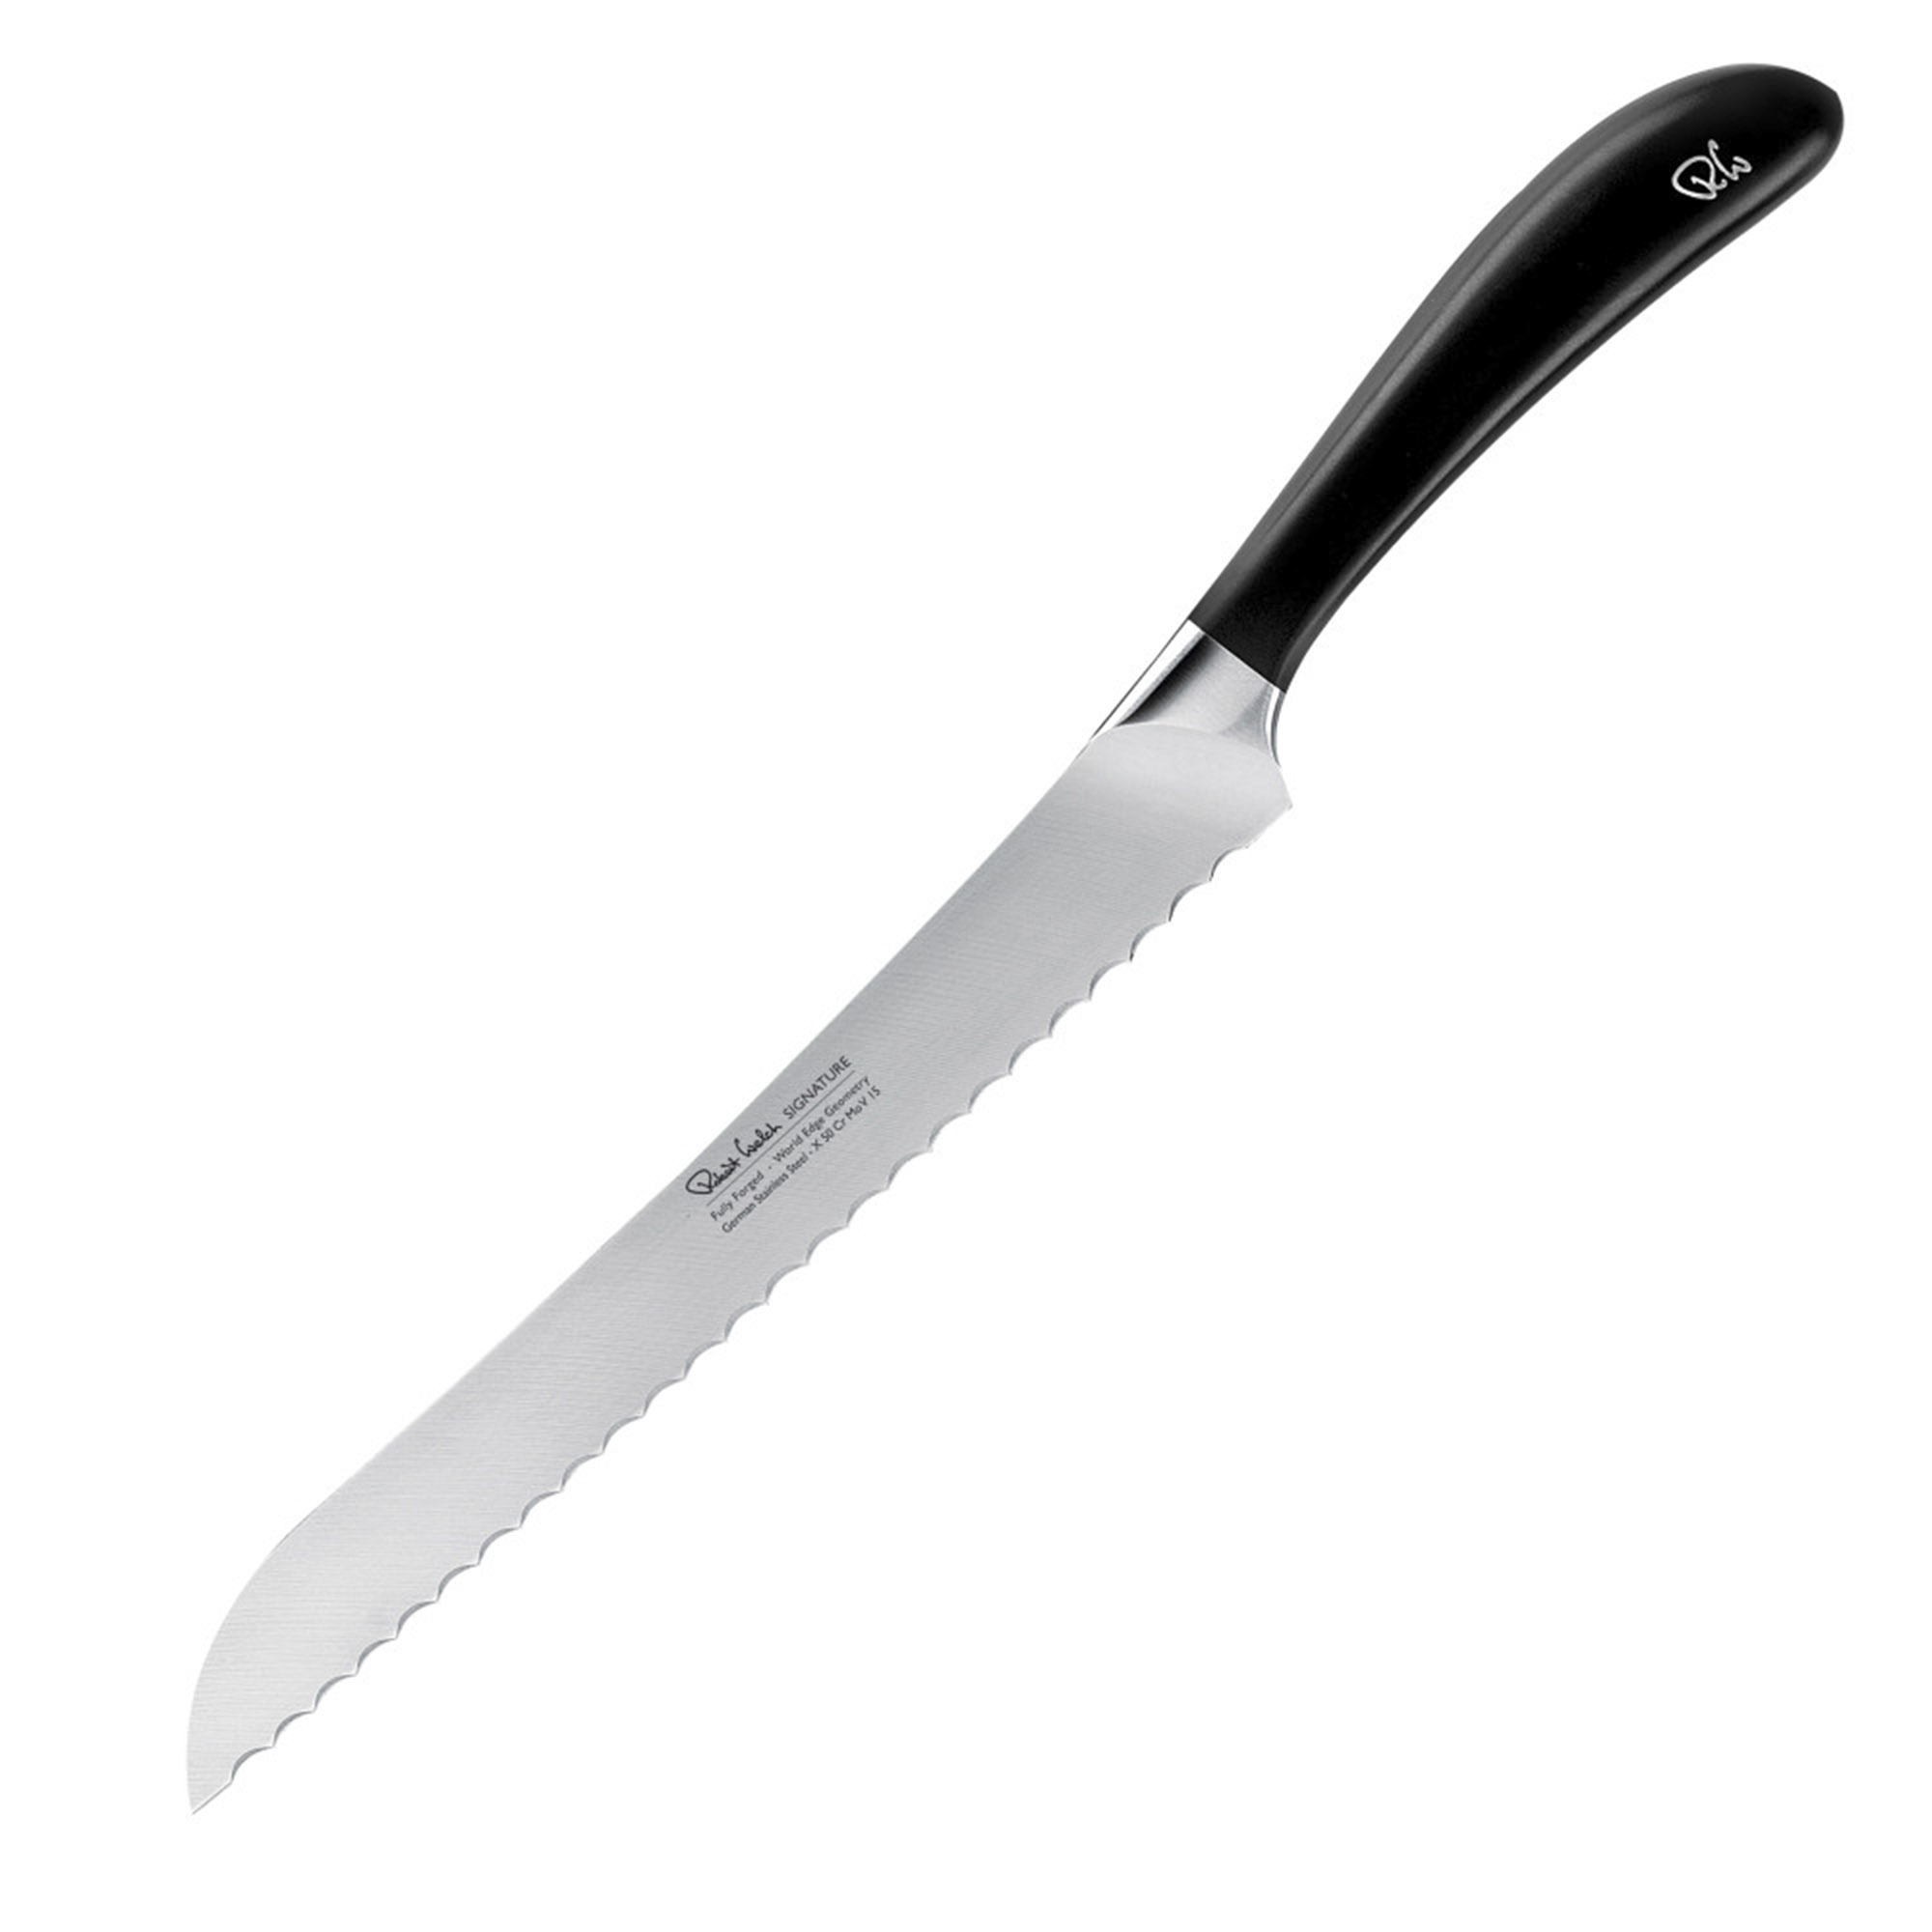 Нож для хлеба Robert Welch Signature 22 см нож для хлеба classic 4149 200 мм